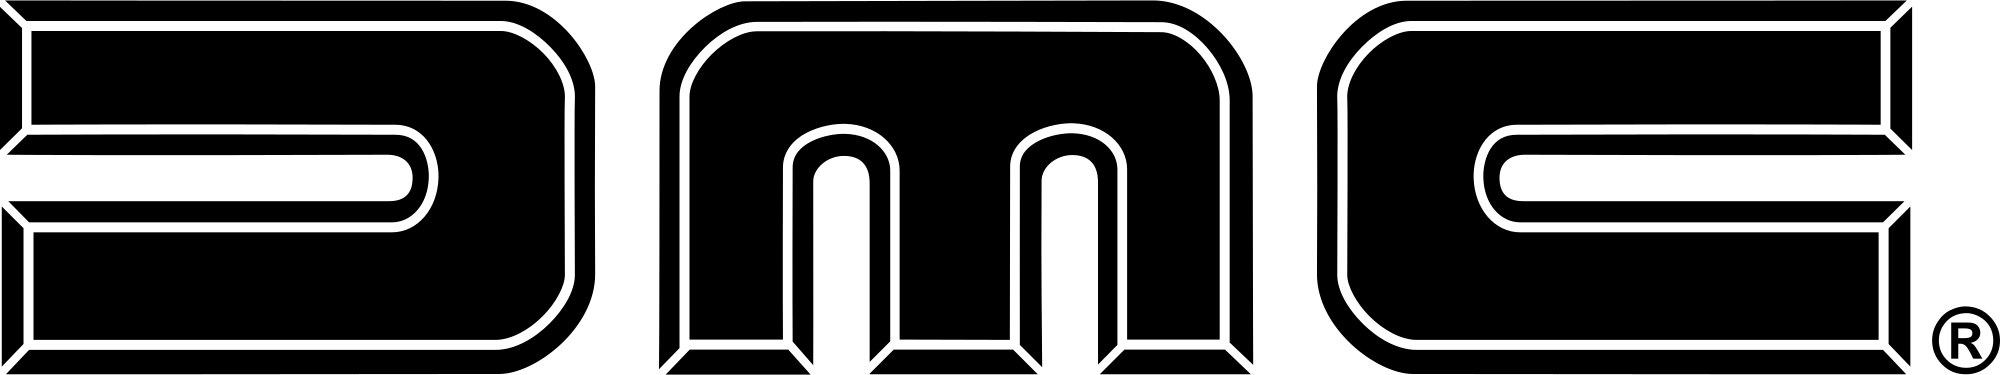 2000px-DeLorean_logo.svg.png